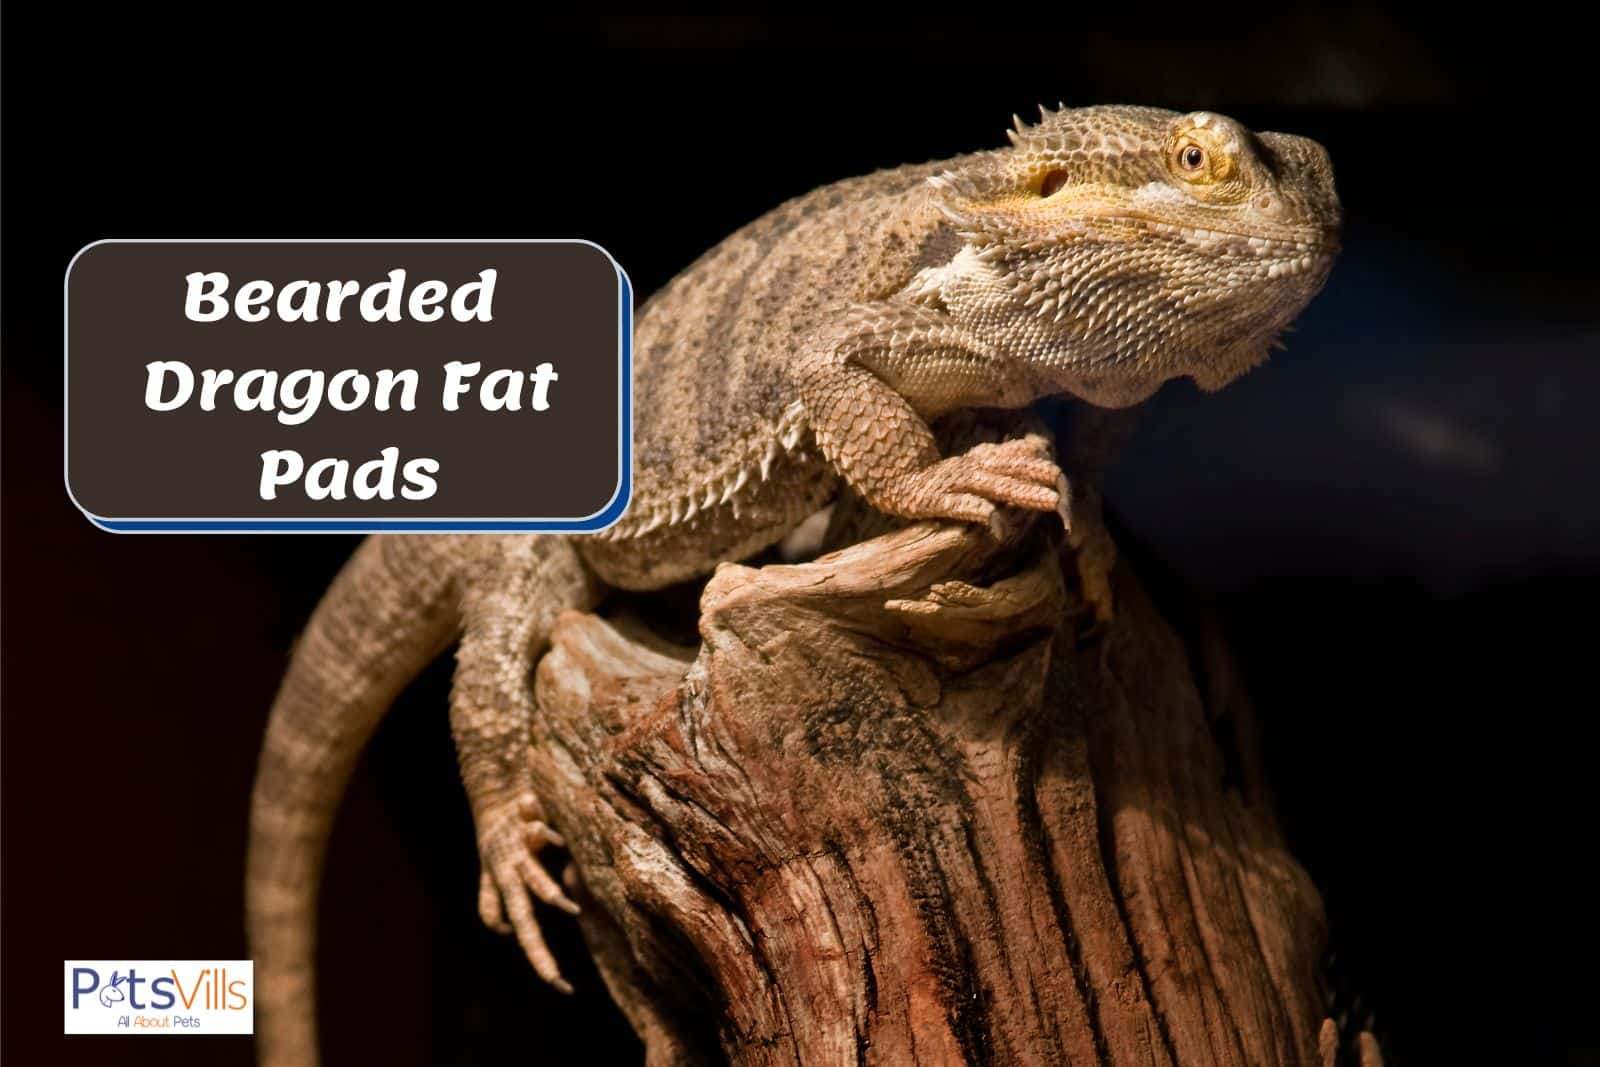 beardie with bearded dragon fat pads